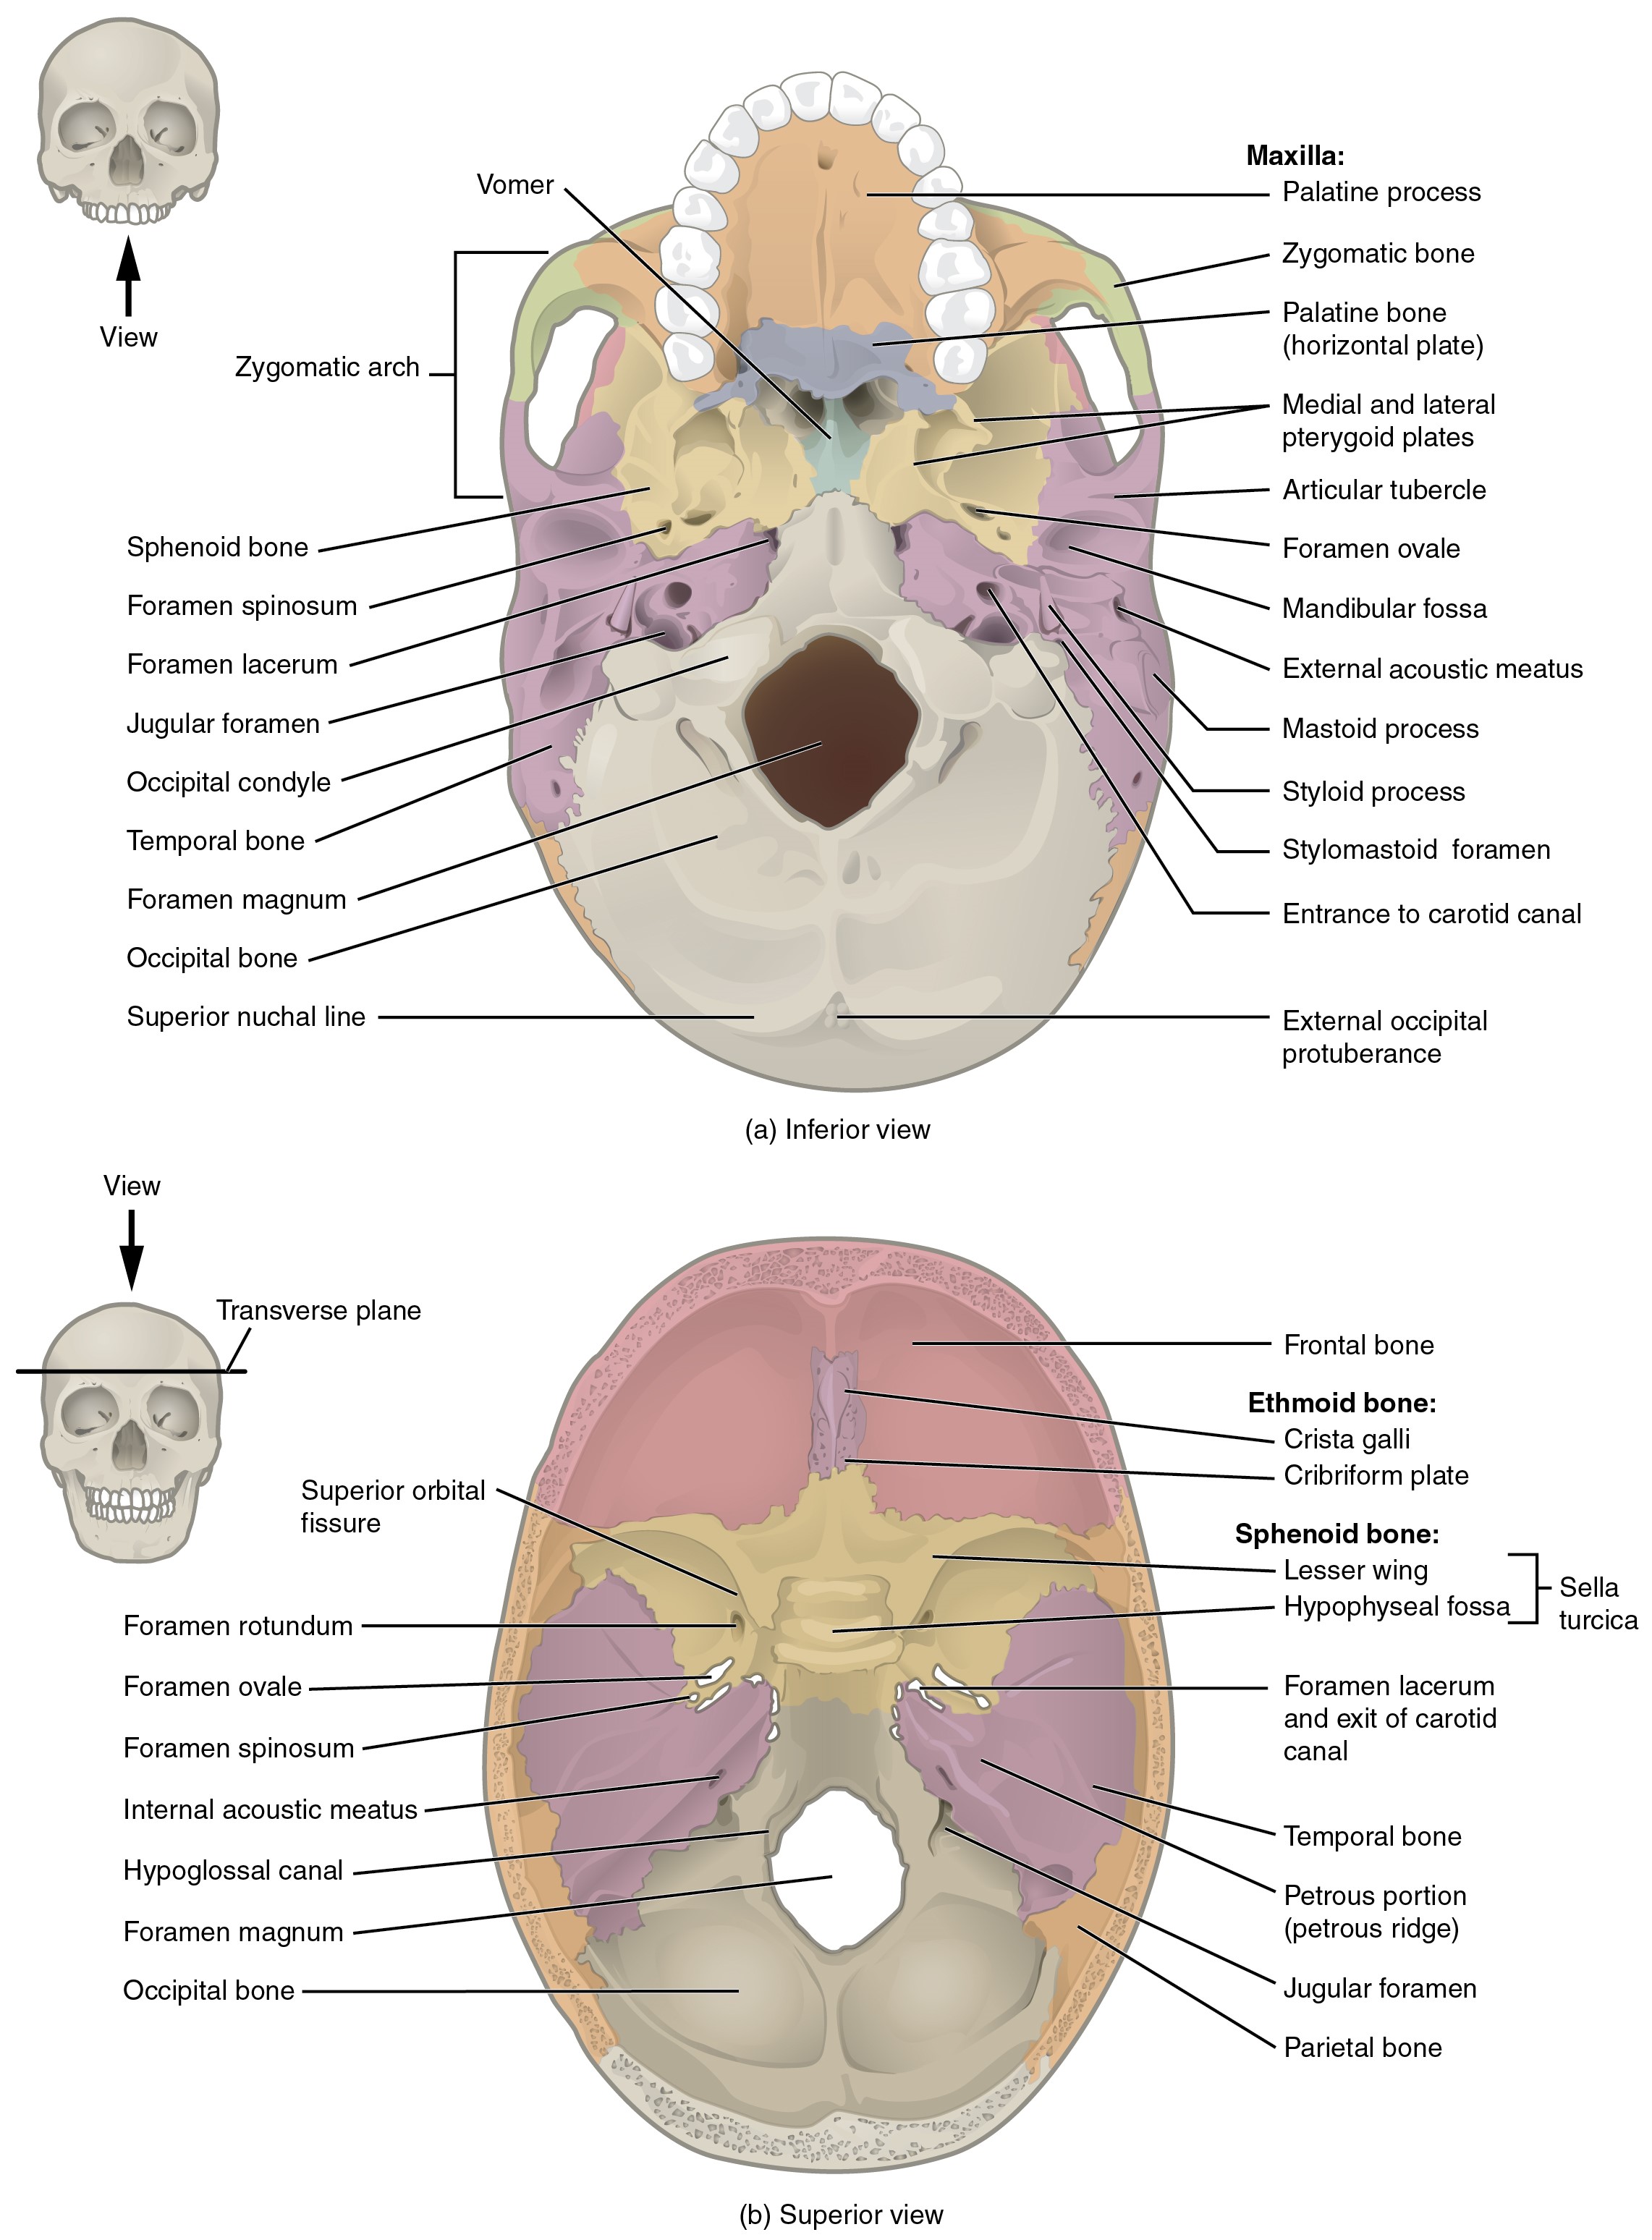 Superior-Inferior View of Skull Base